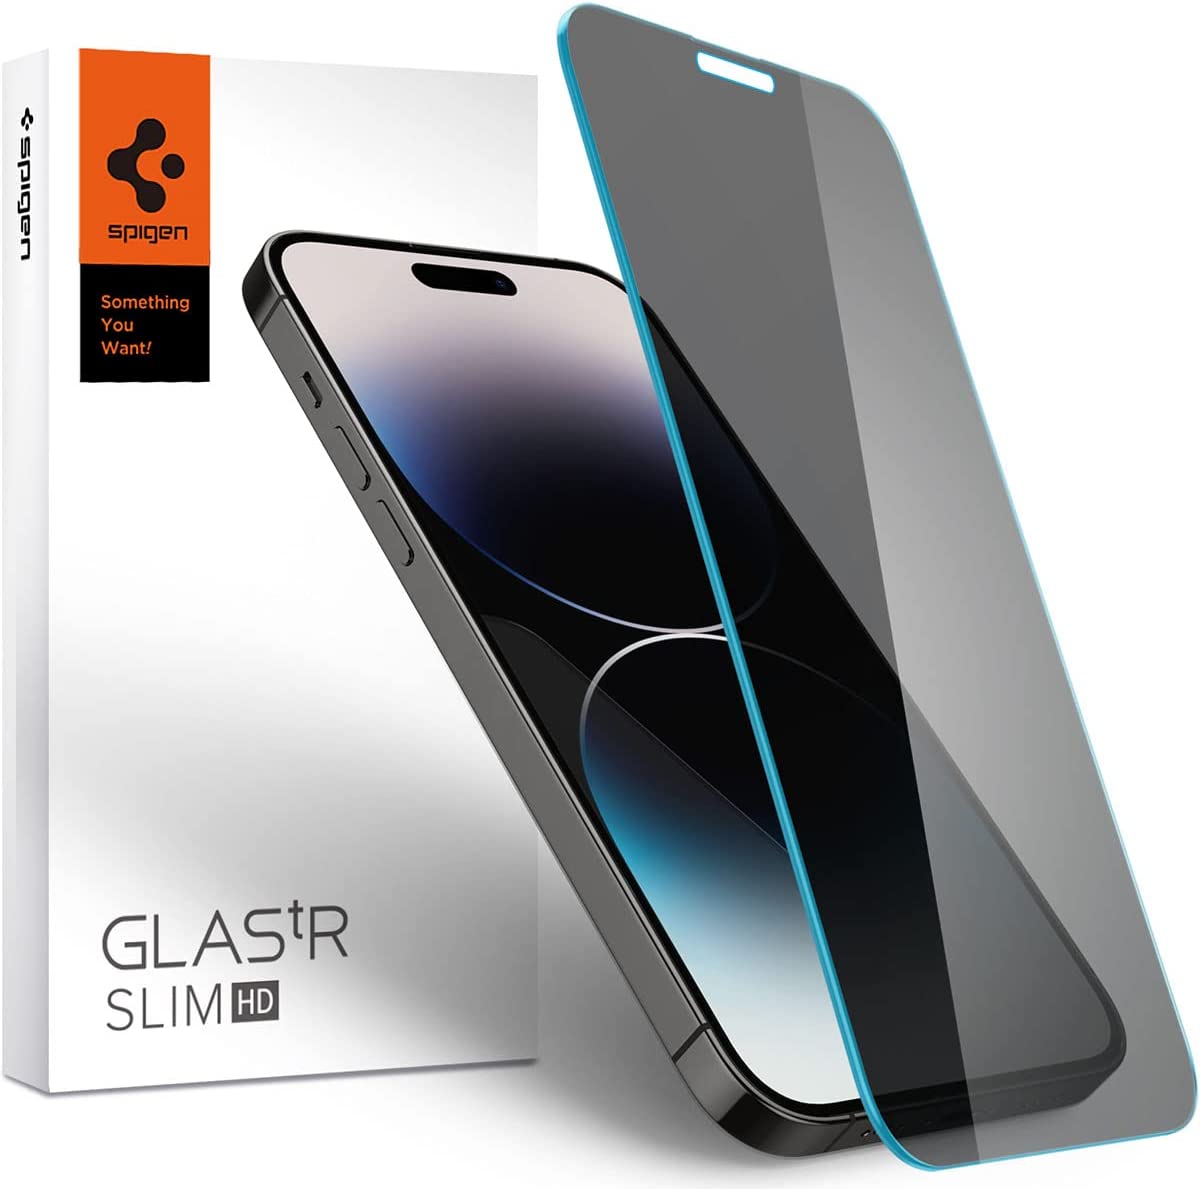 Spigen GLAStR Slim HD [PRIVACY] designed for iPhone 14 PRO Privacy Screen Protector Premium Tempered Glass - Case Friendly